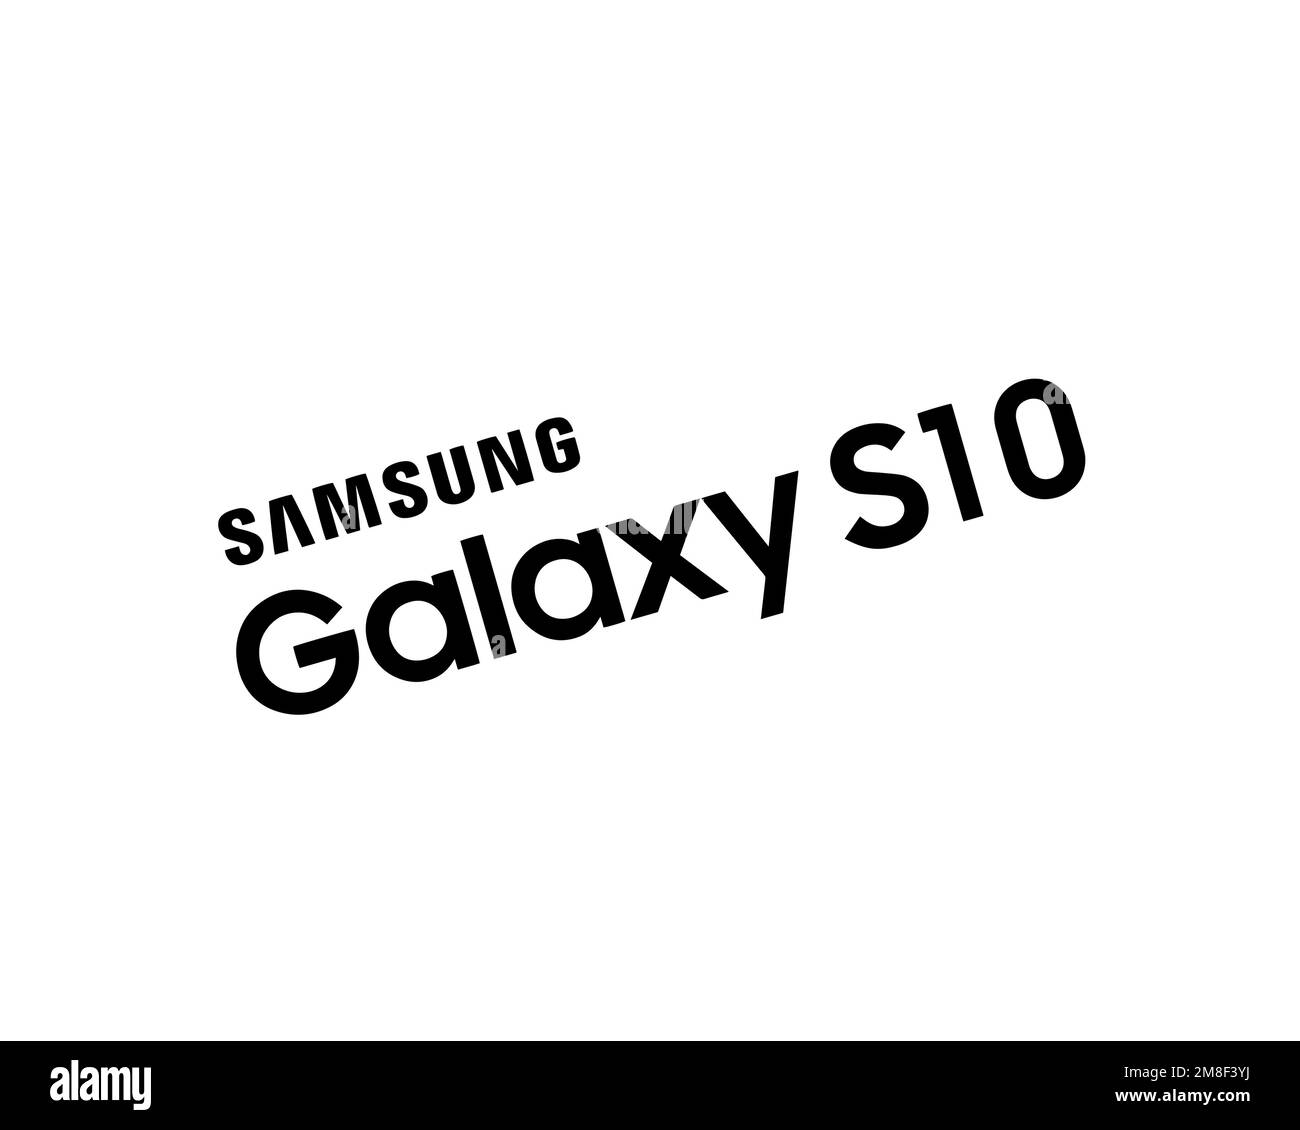 Samsung Galaxy S10, rotated logo, white background Stock Photo